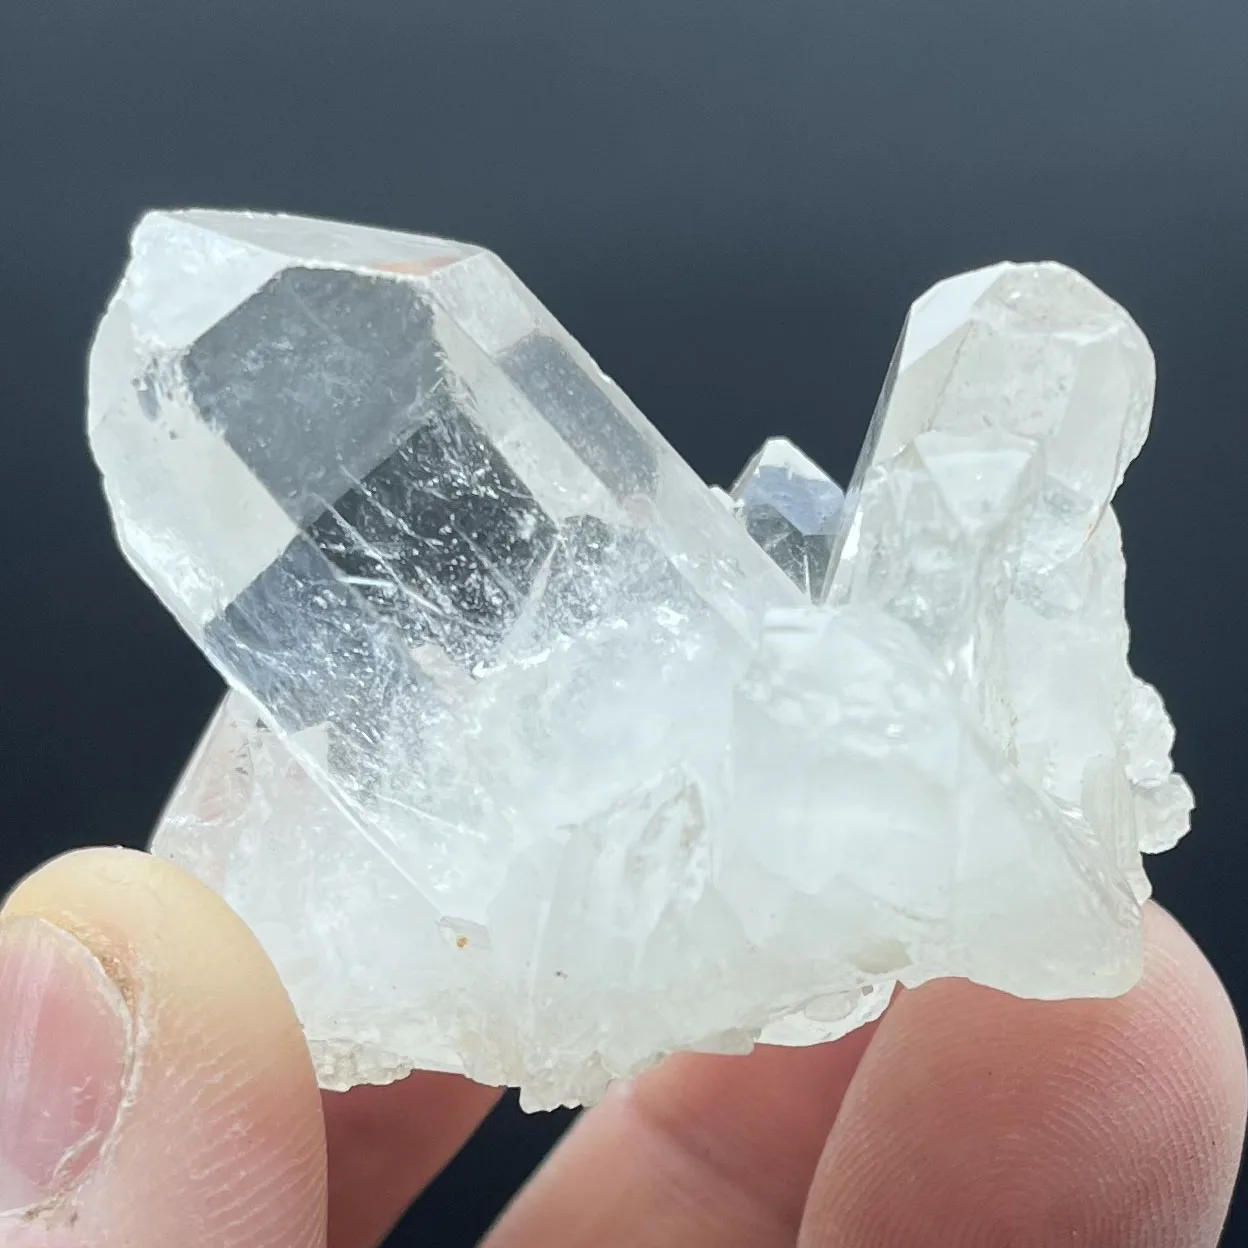 White Crystal Cluster Clear Quartz Natural Raw Specimen Healing Gemstone Reiki Meditation Energy Stone Home Decoration 1